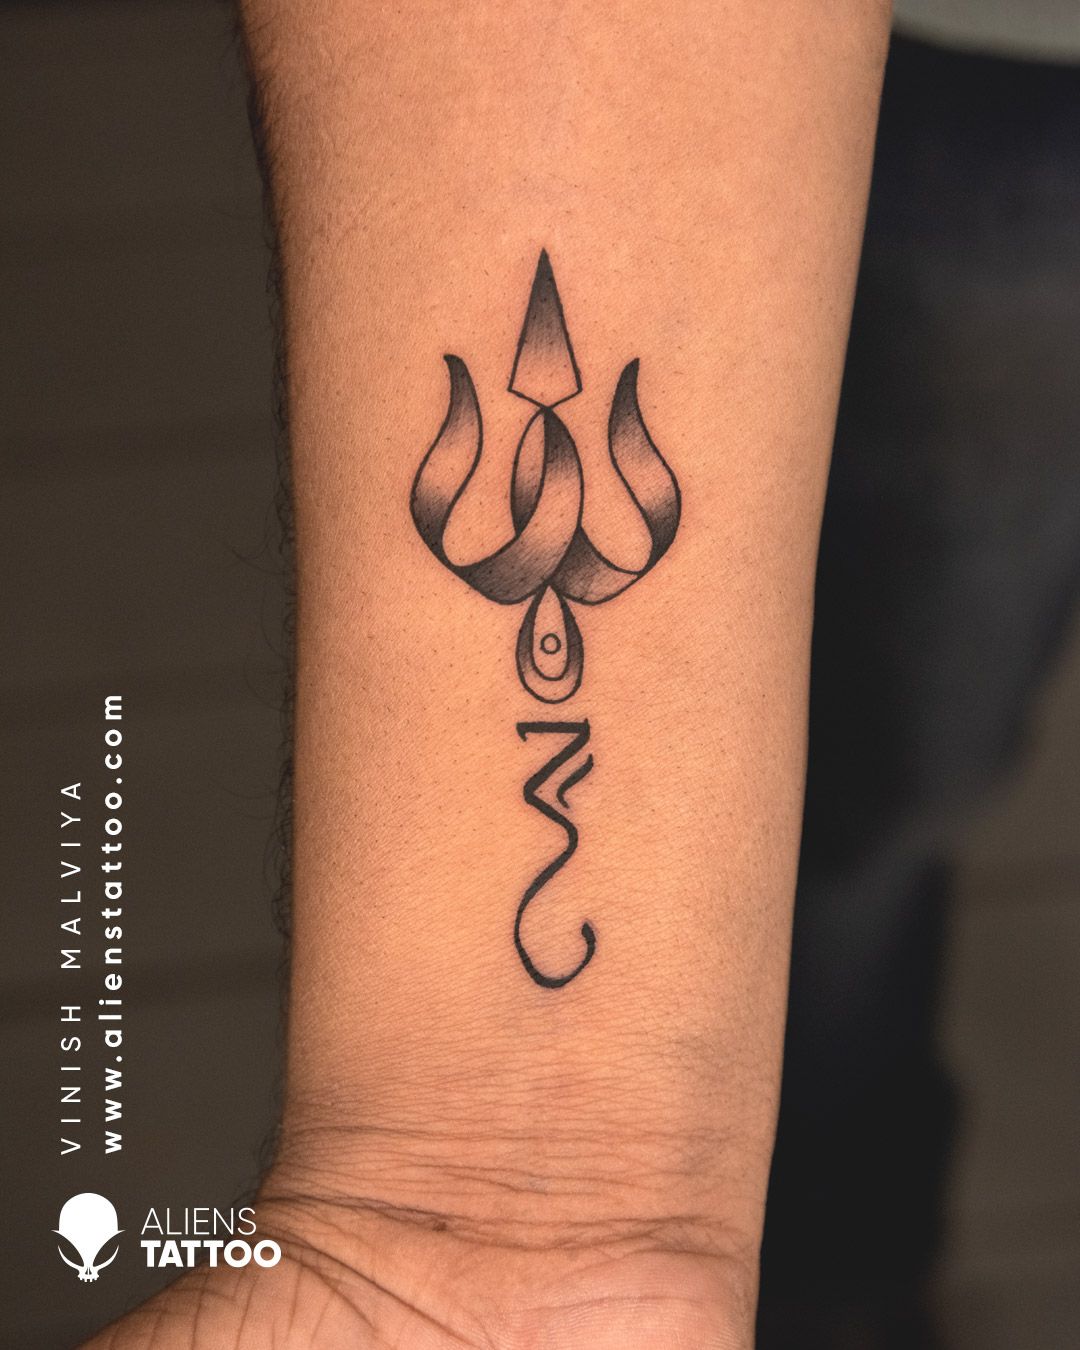 Armband Tattoo By Gaurav Saini by Javagreeen on DeviantArt